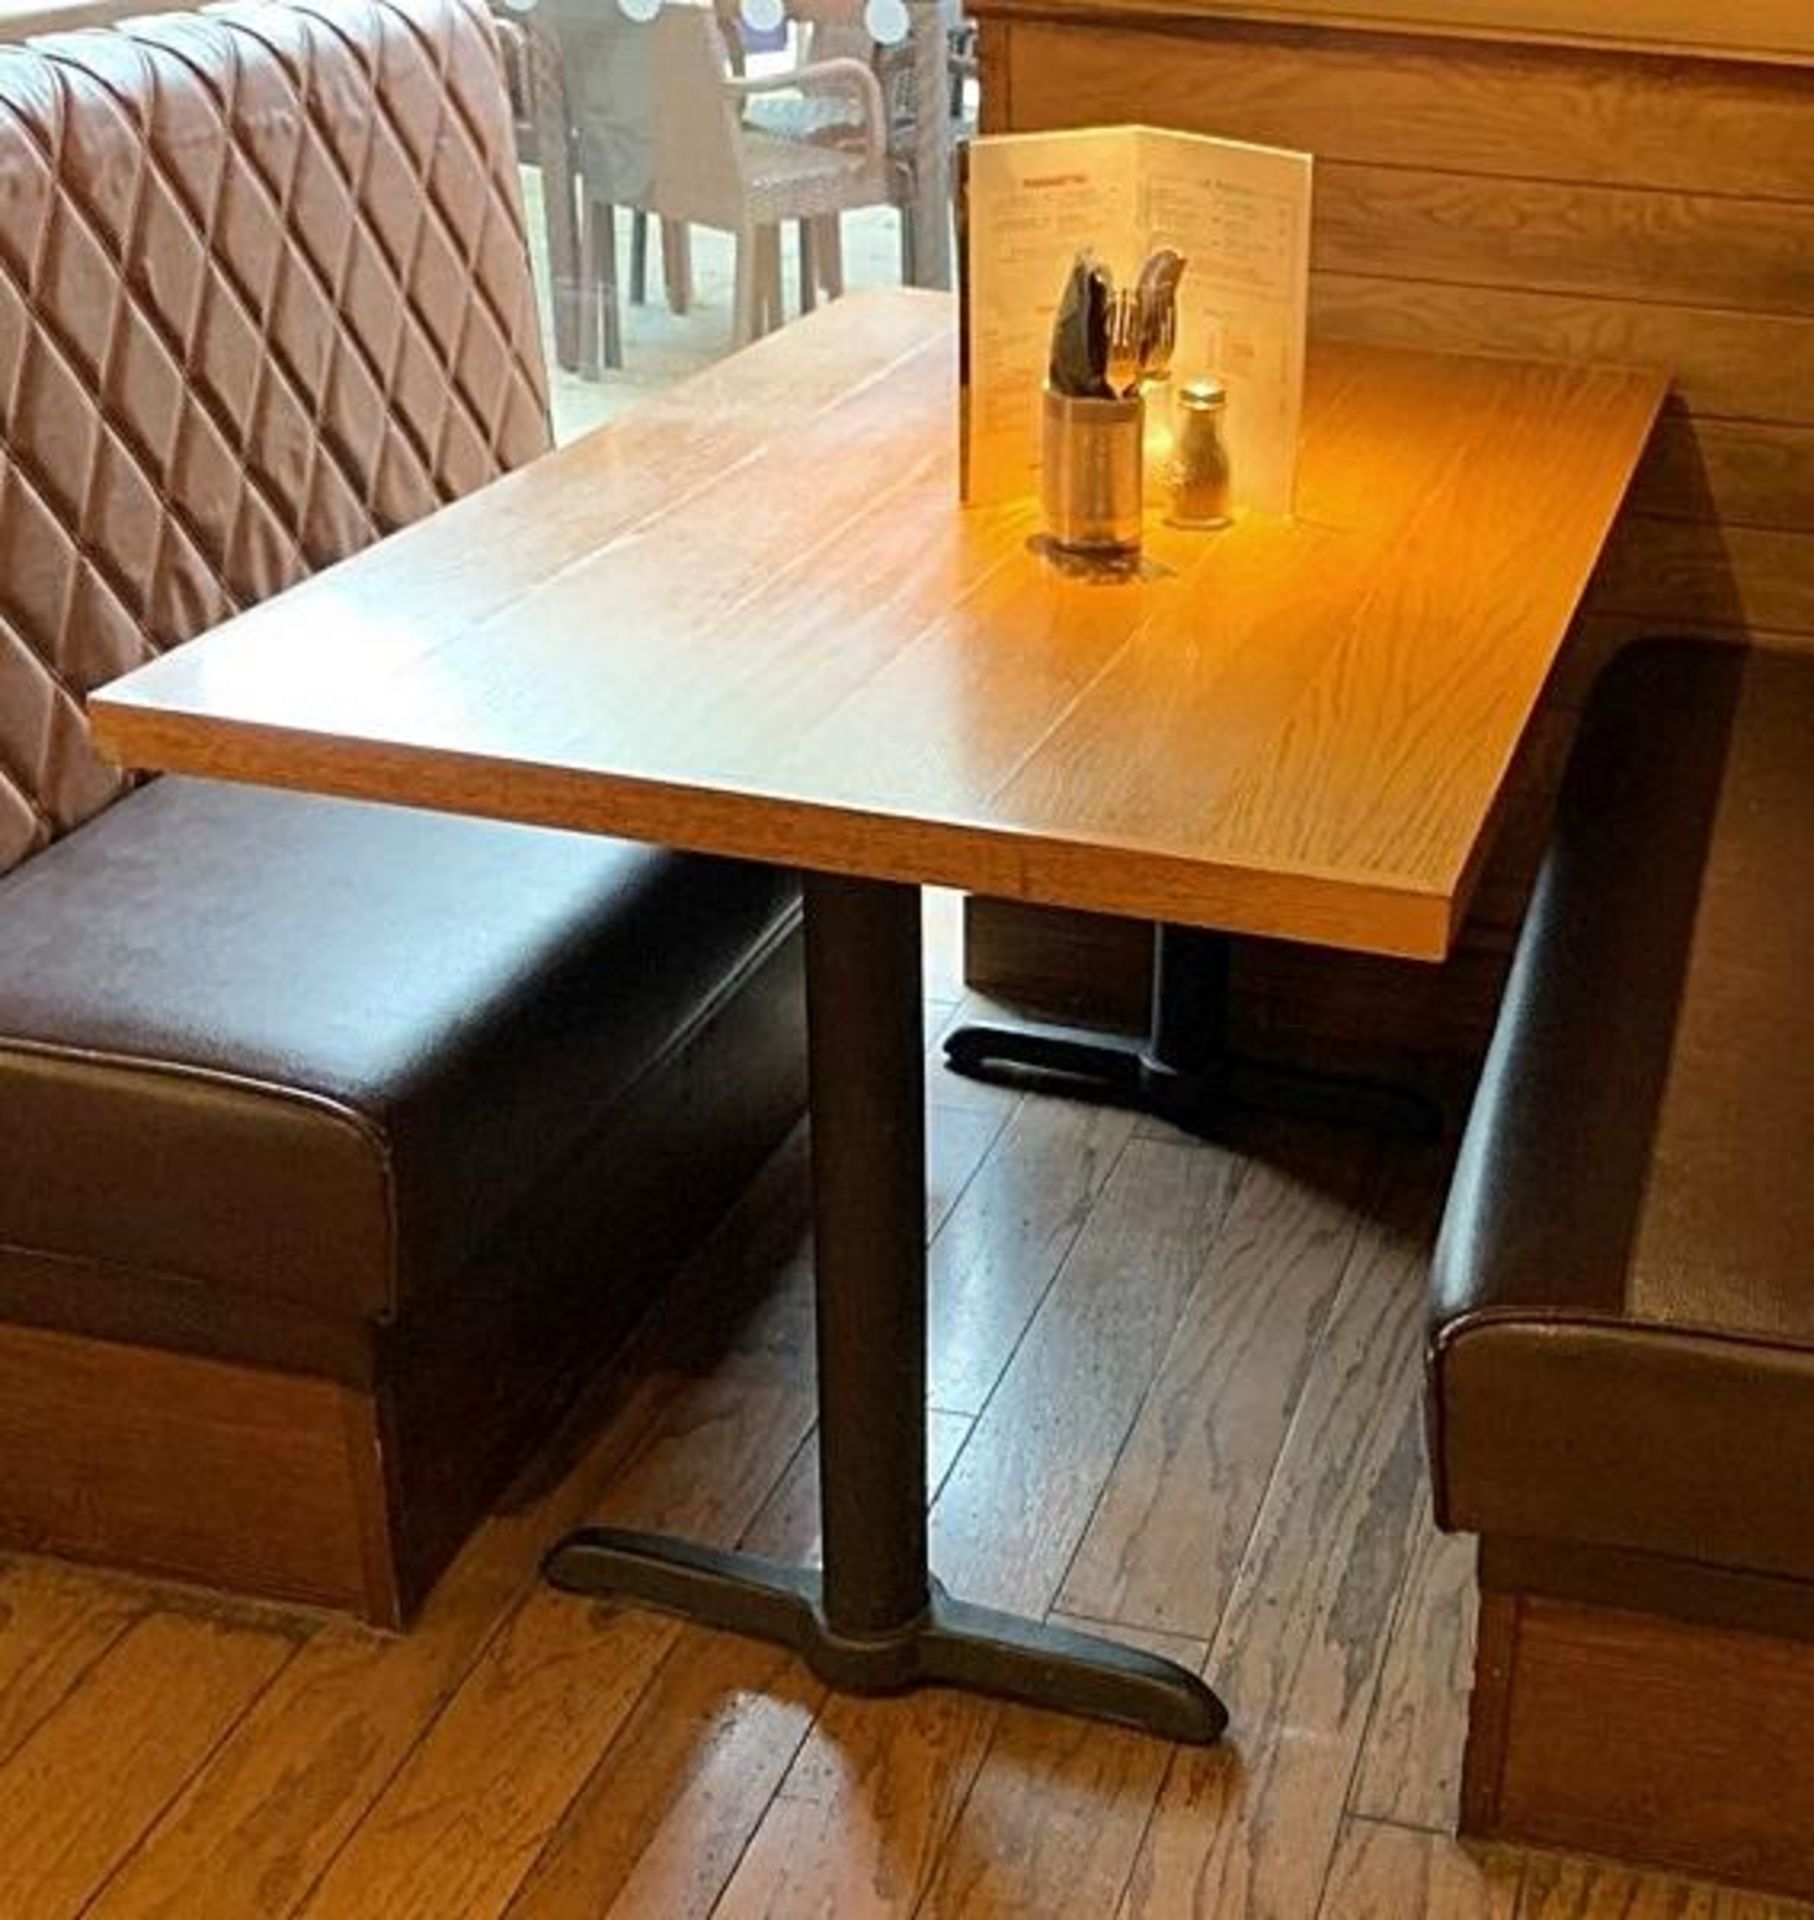 5 x Paneled Design Rectangular Restaurant Dining Tables With Cast Iron Bases - Dimensions: L125cm x - Bild 2 aus 2